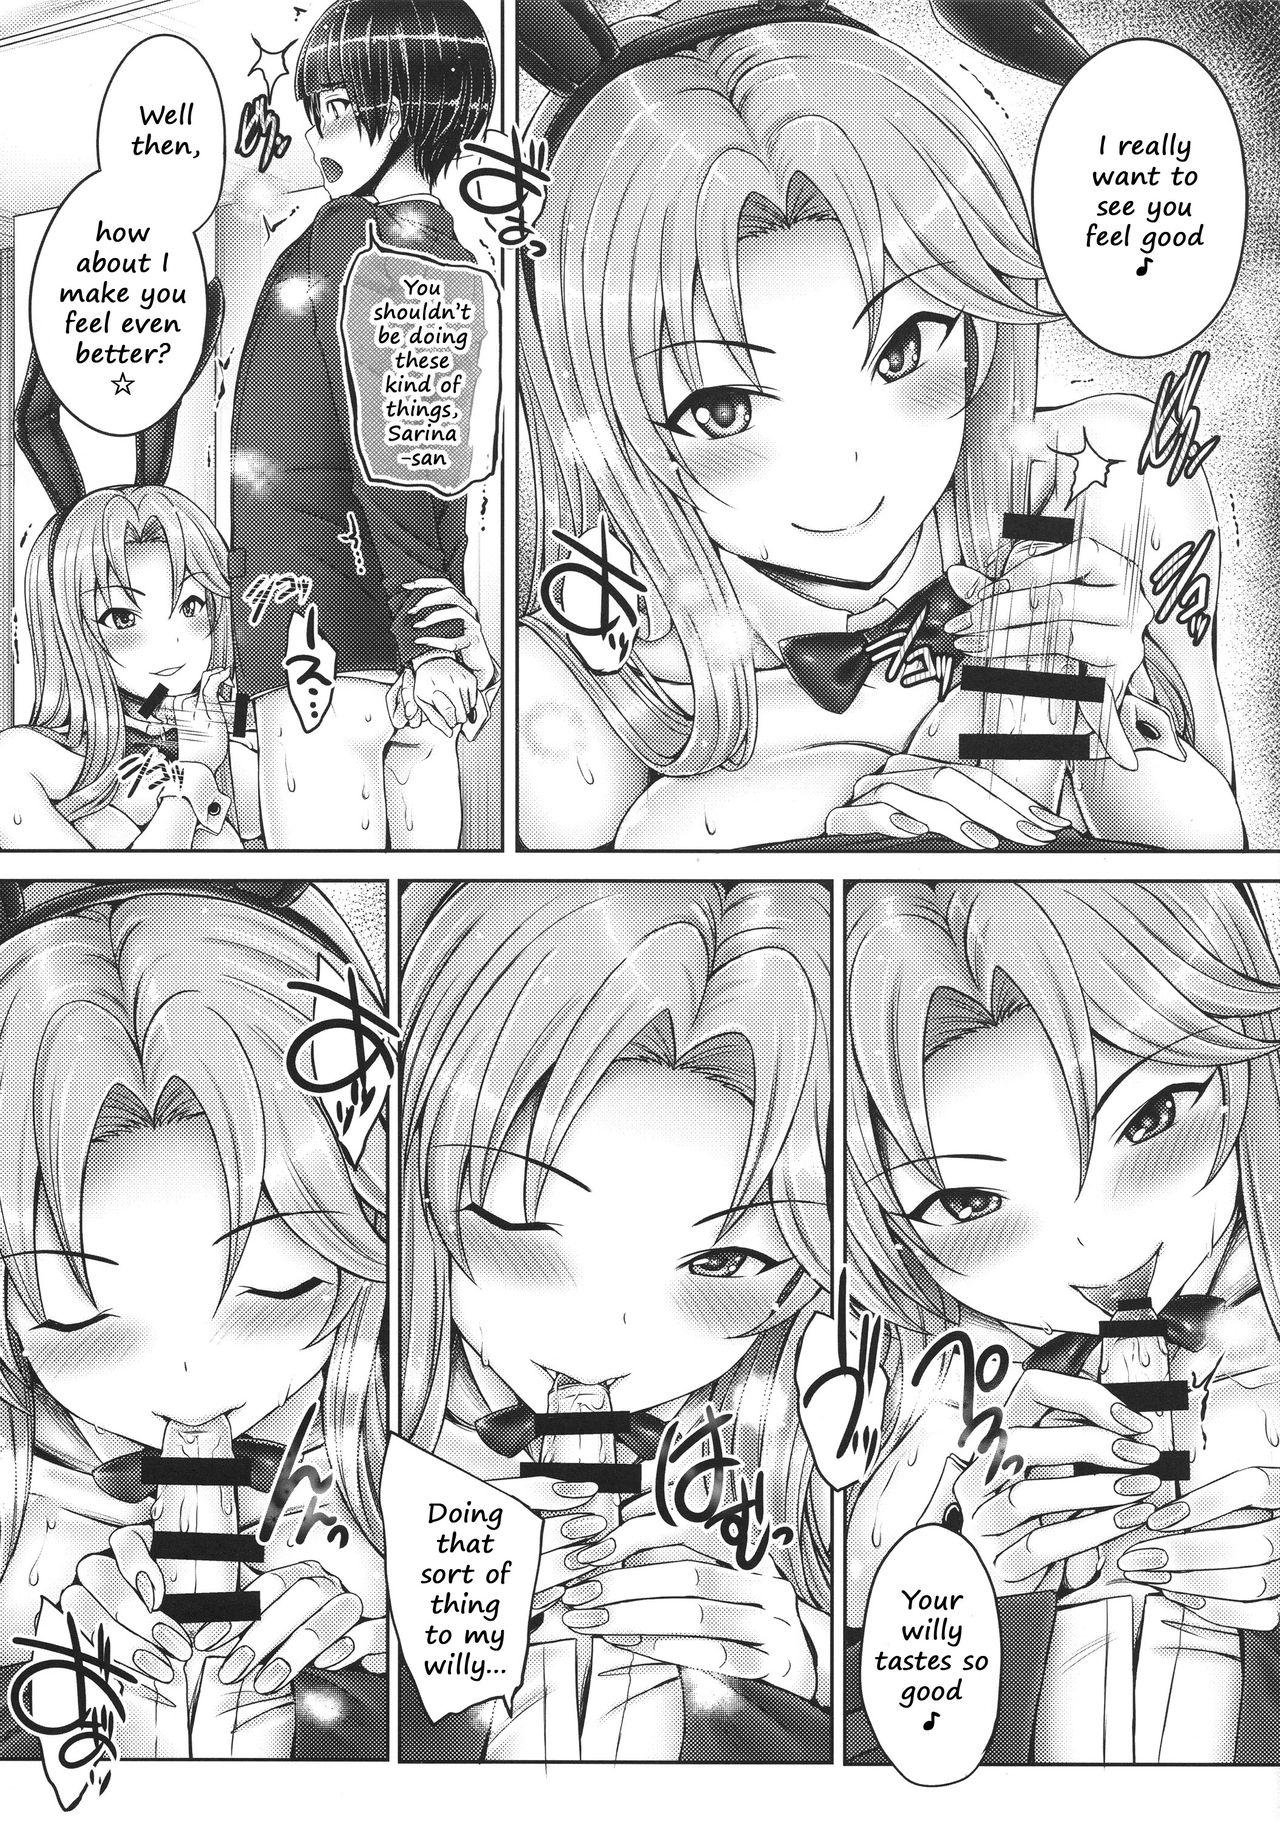 Butthole Sarina-san to Shota P - The idolmaster Curvy - Page 6